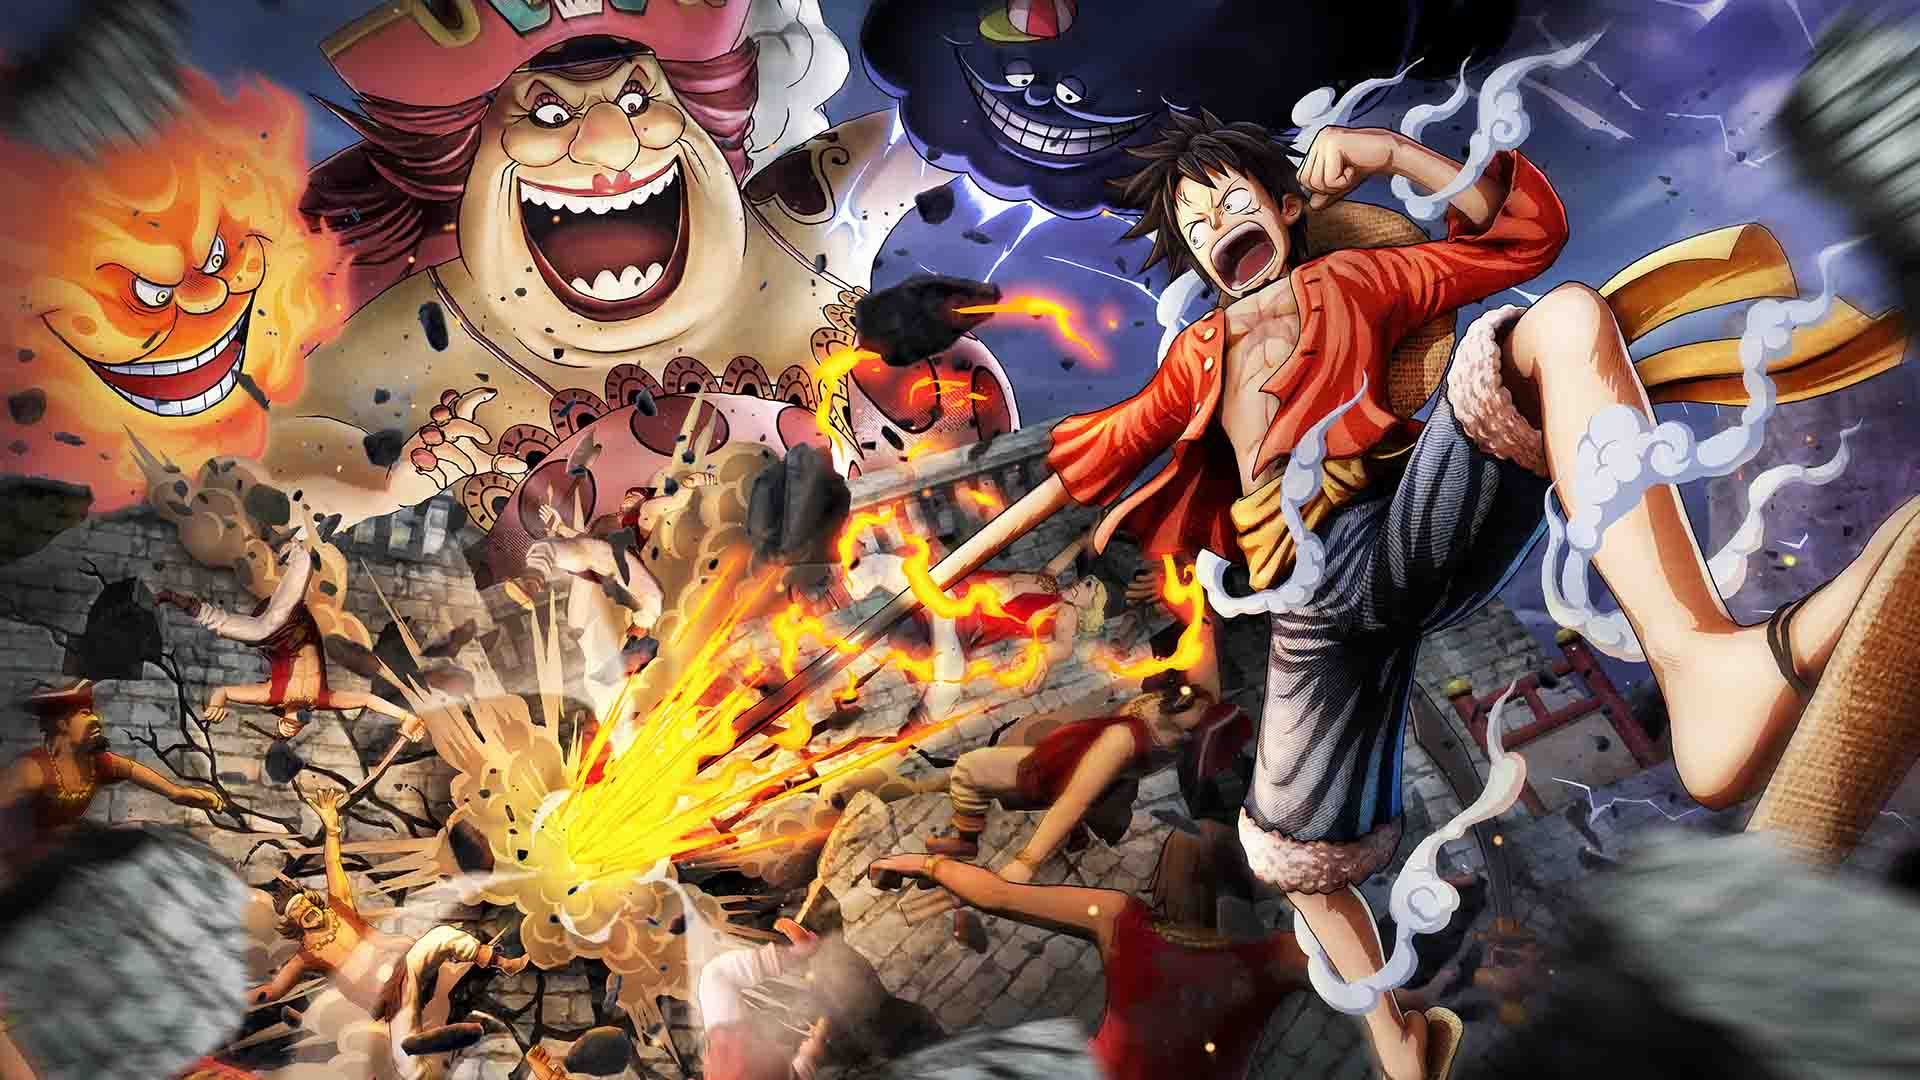 Скриншот *One Piece: Pirate Warriors 4 [PS4] 6.72 / 7.02 / 7.55 [EUR] (2020) [Русский] (v1.02)*